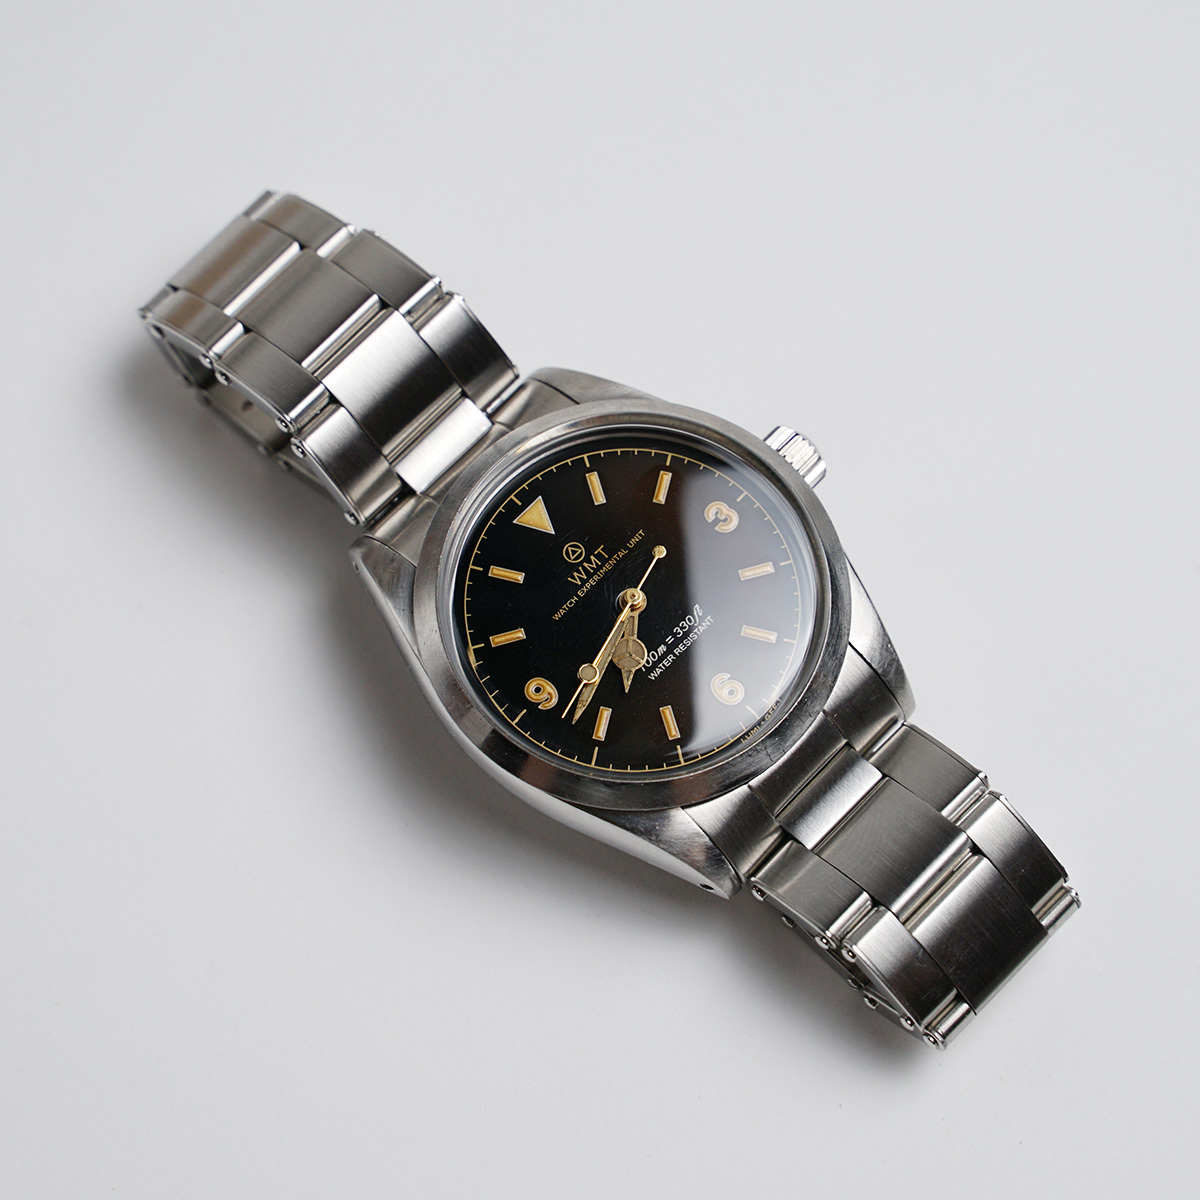 WMT サンフォード GMT 腕時計 wmt ルートビア - www.munisanta.gob.pe